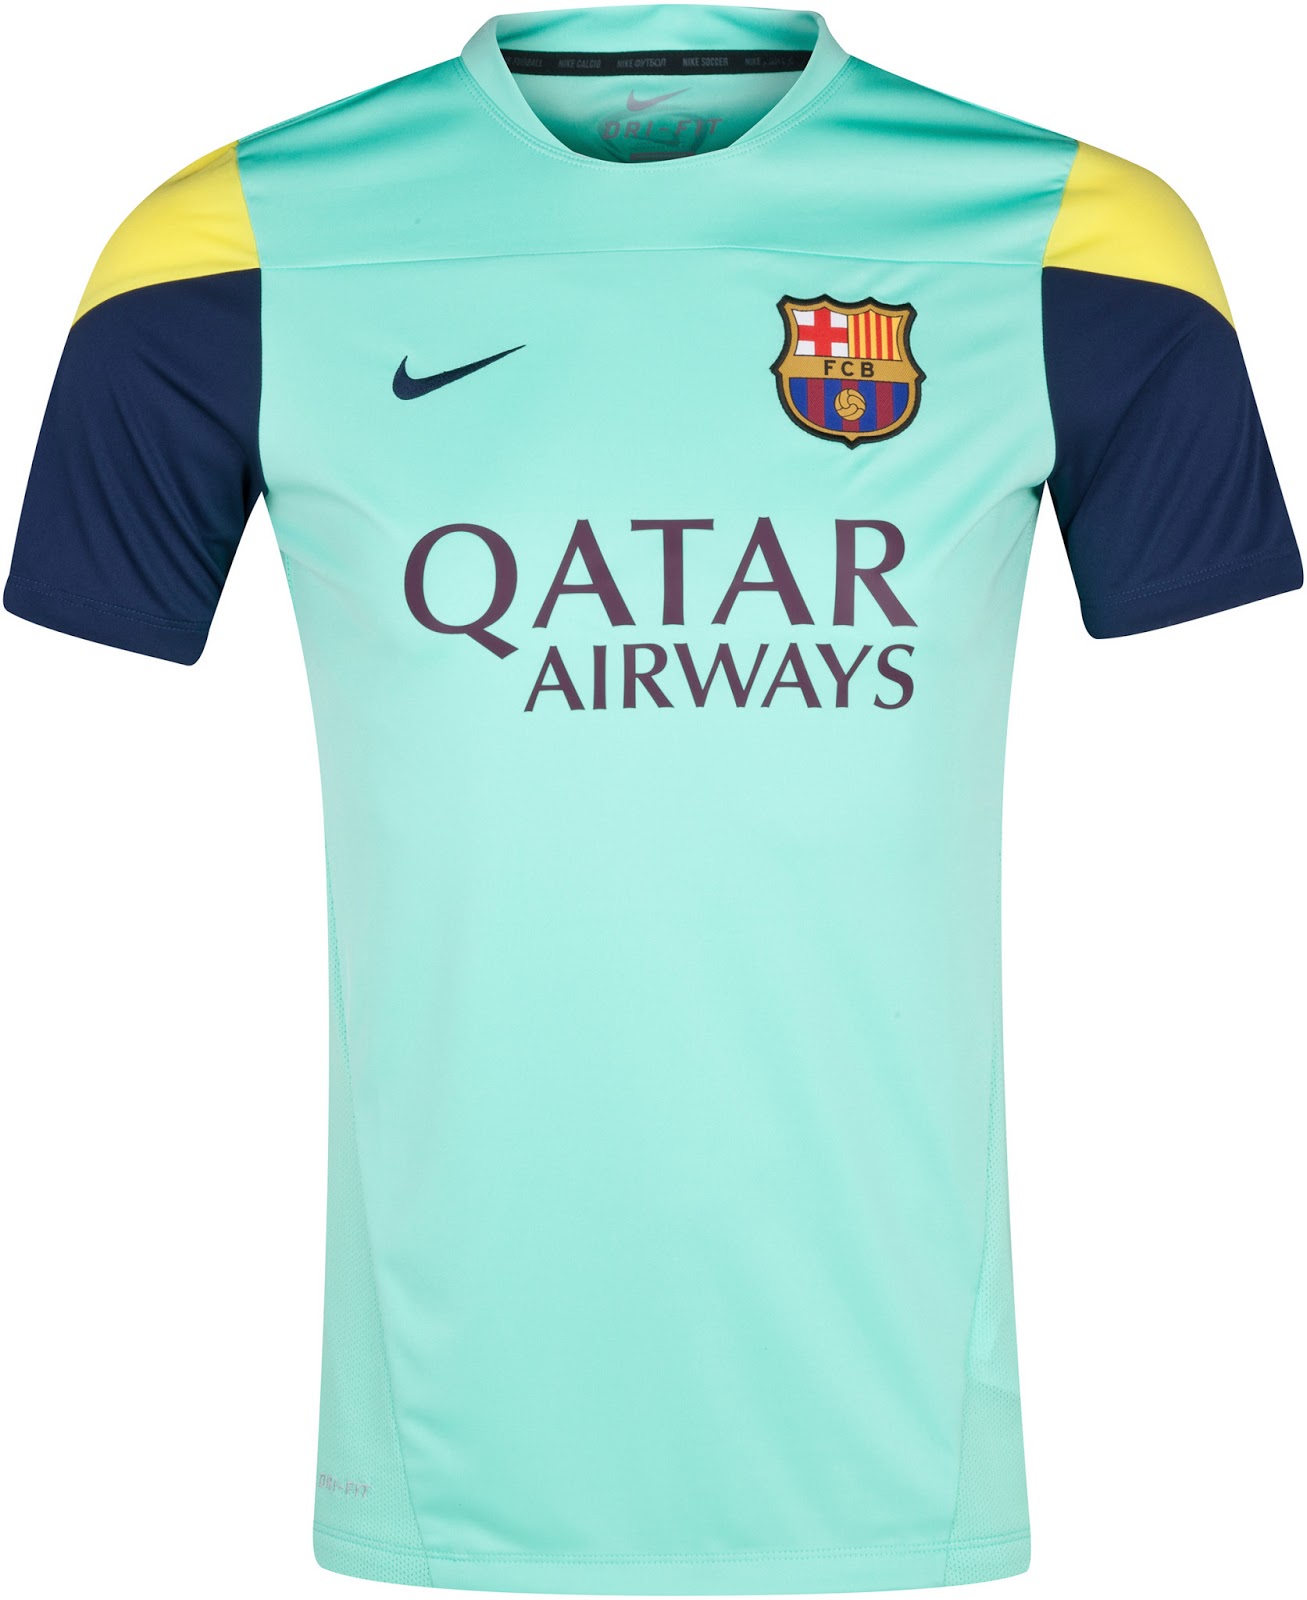 FC Barcelona 2013 14 Training Kits  fc barcelona kits